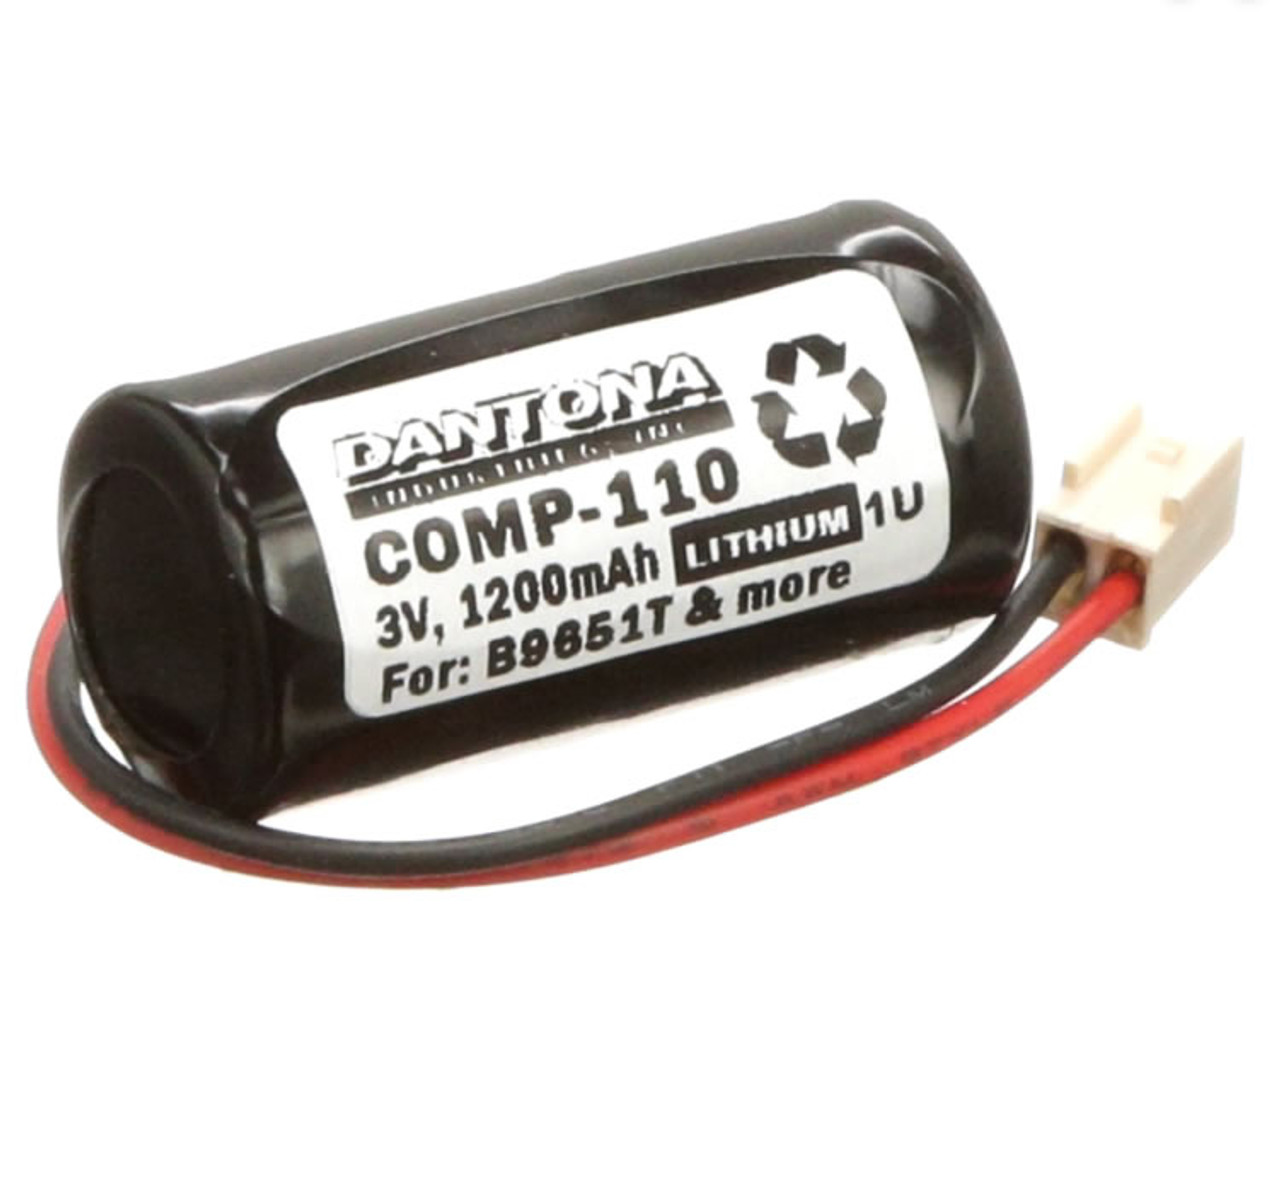 COMP-110 Dantona Battery Replacement - Direct Logic PLC Logic Controller